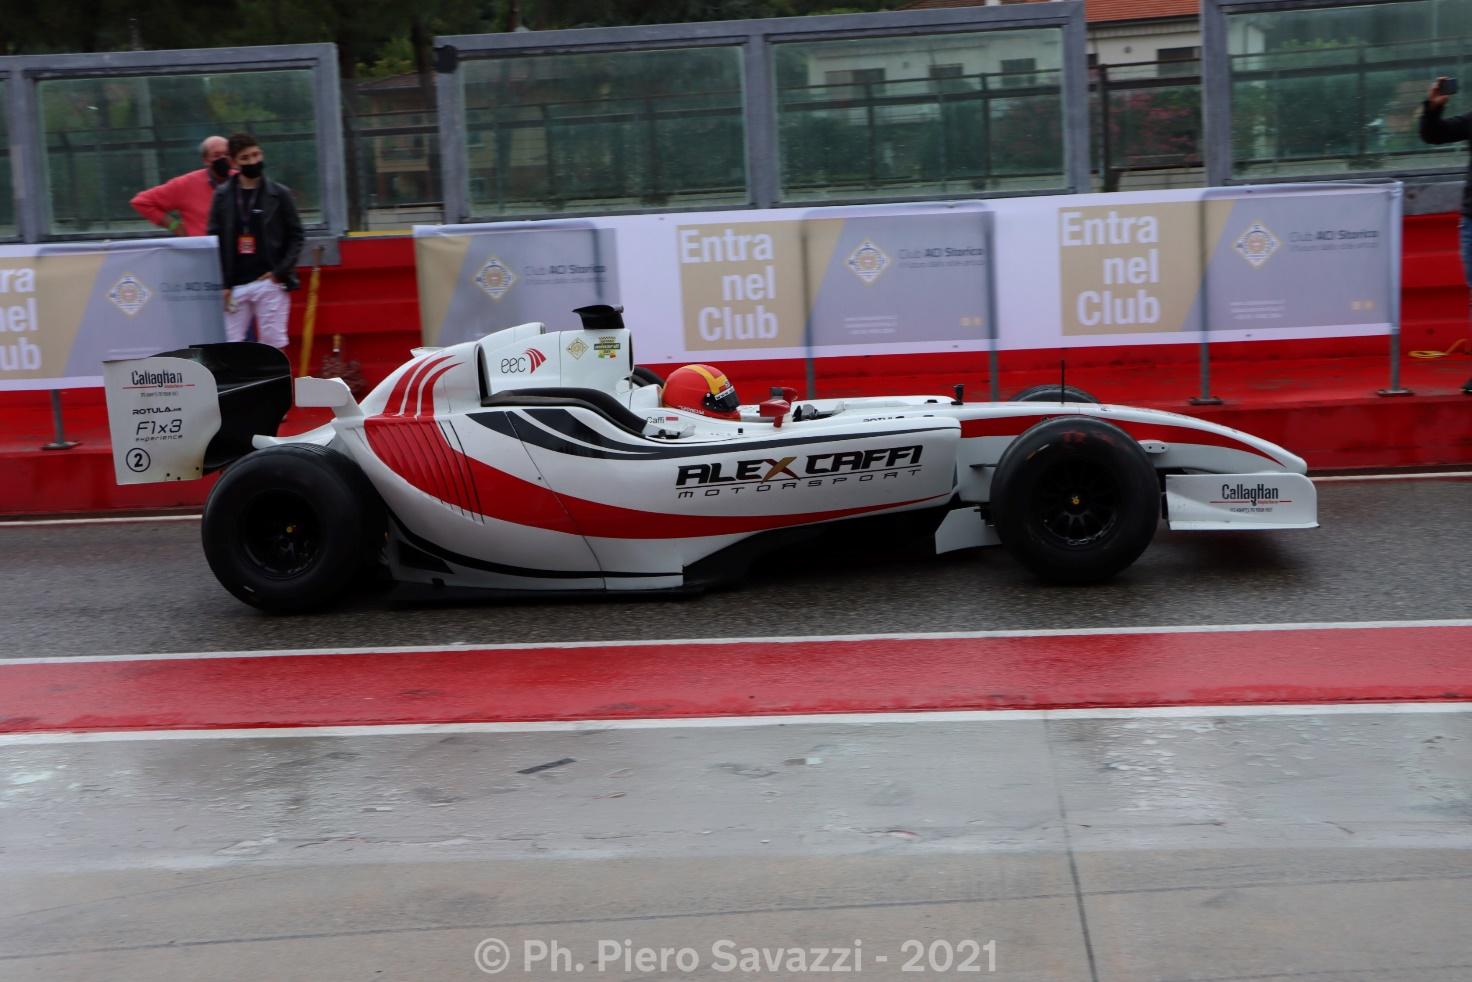 Alex Caffi's white racing car.